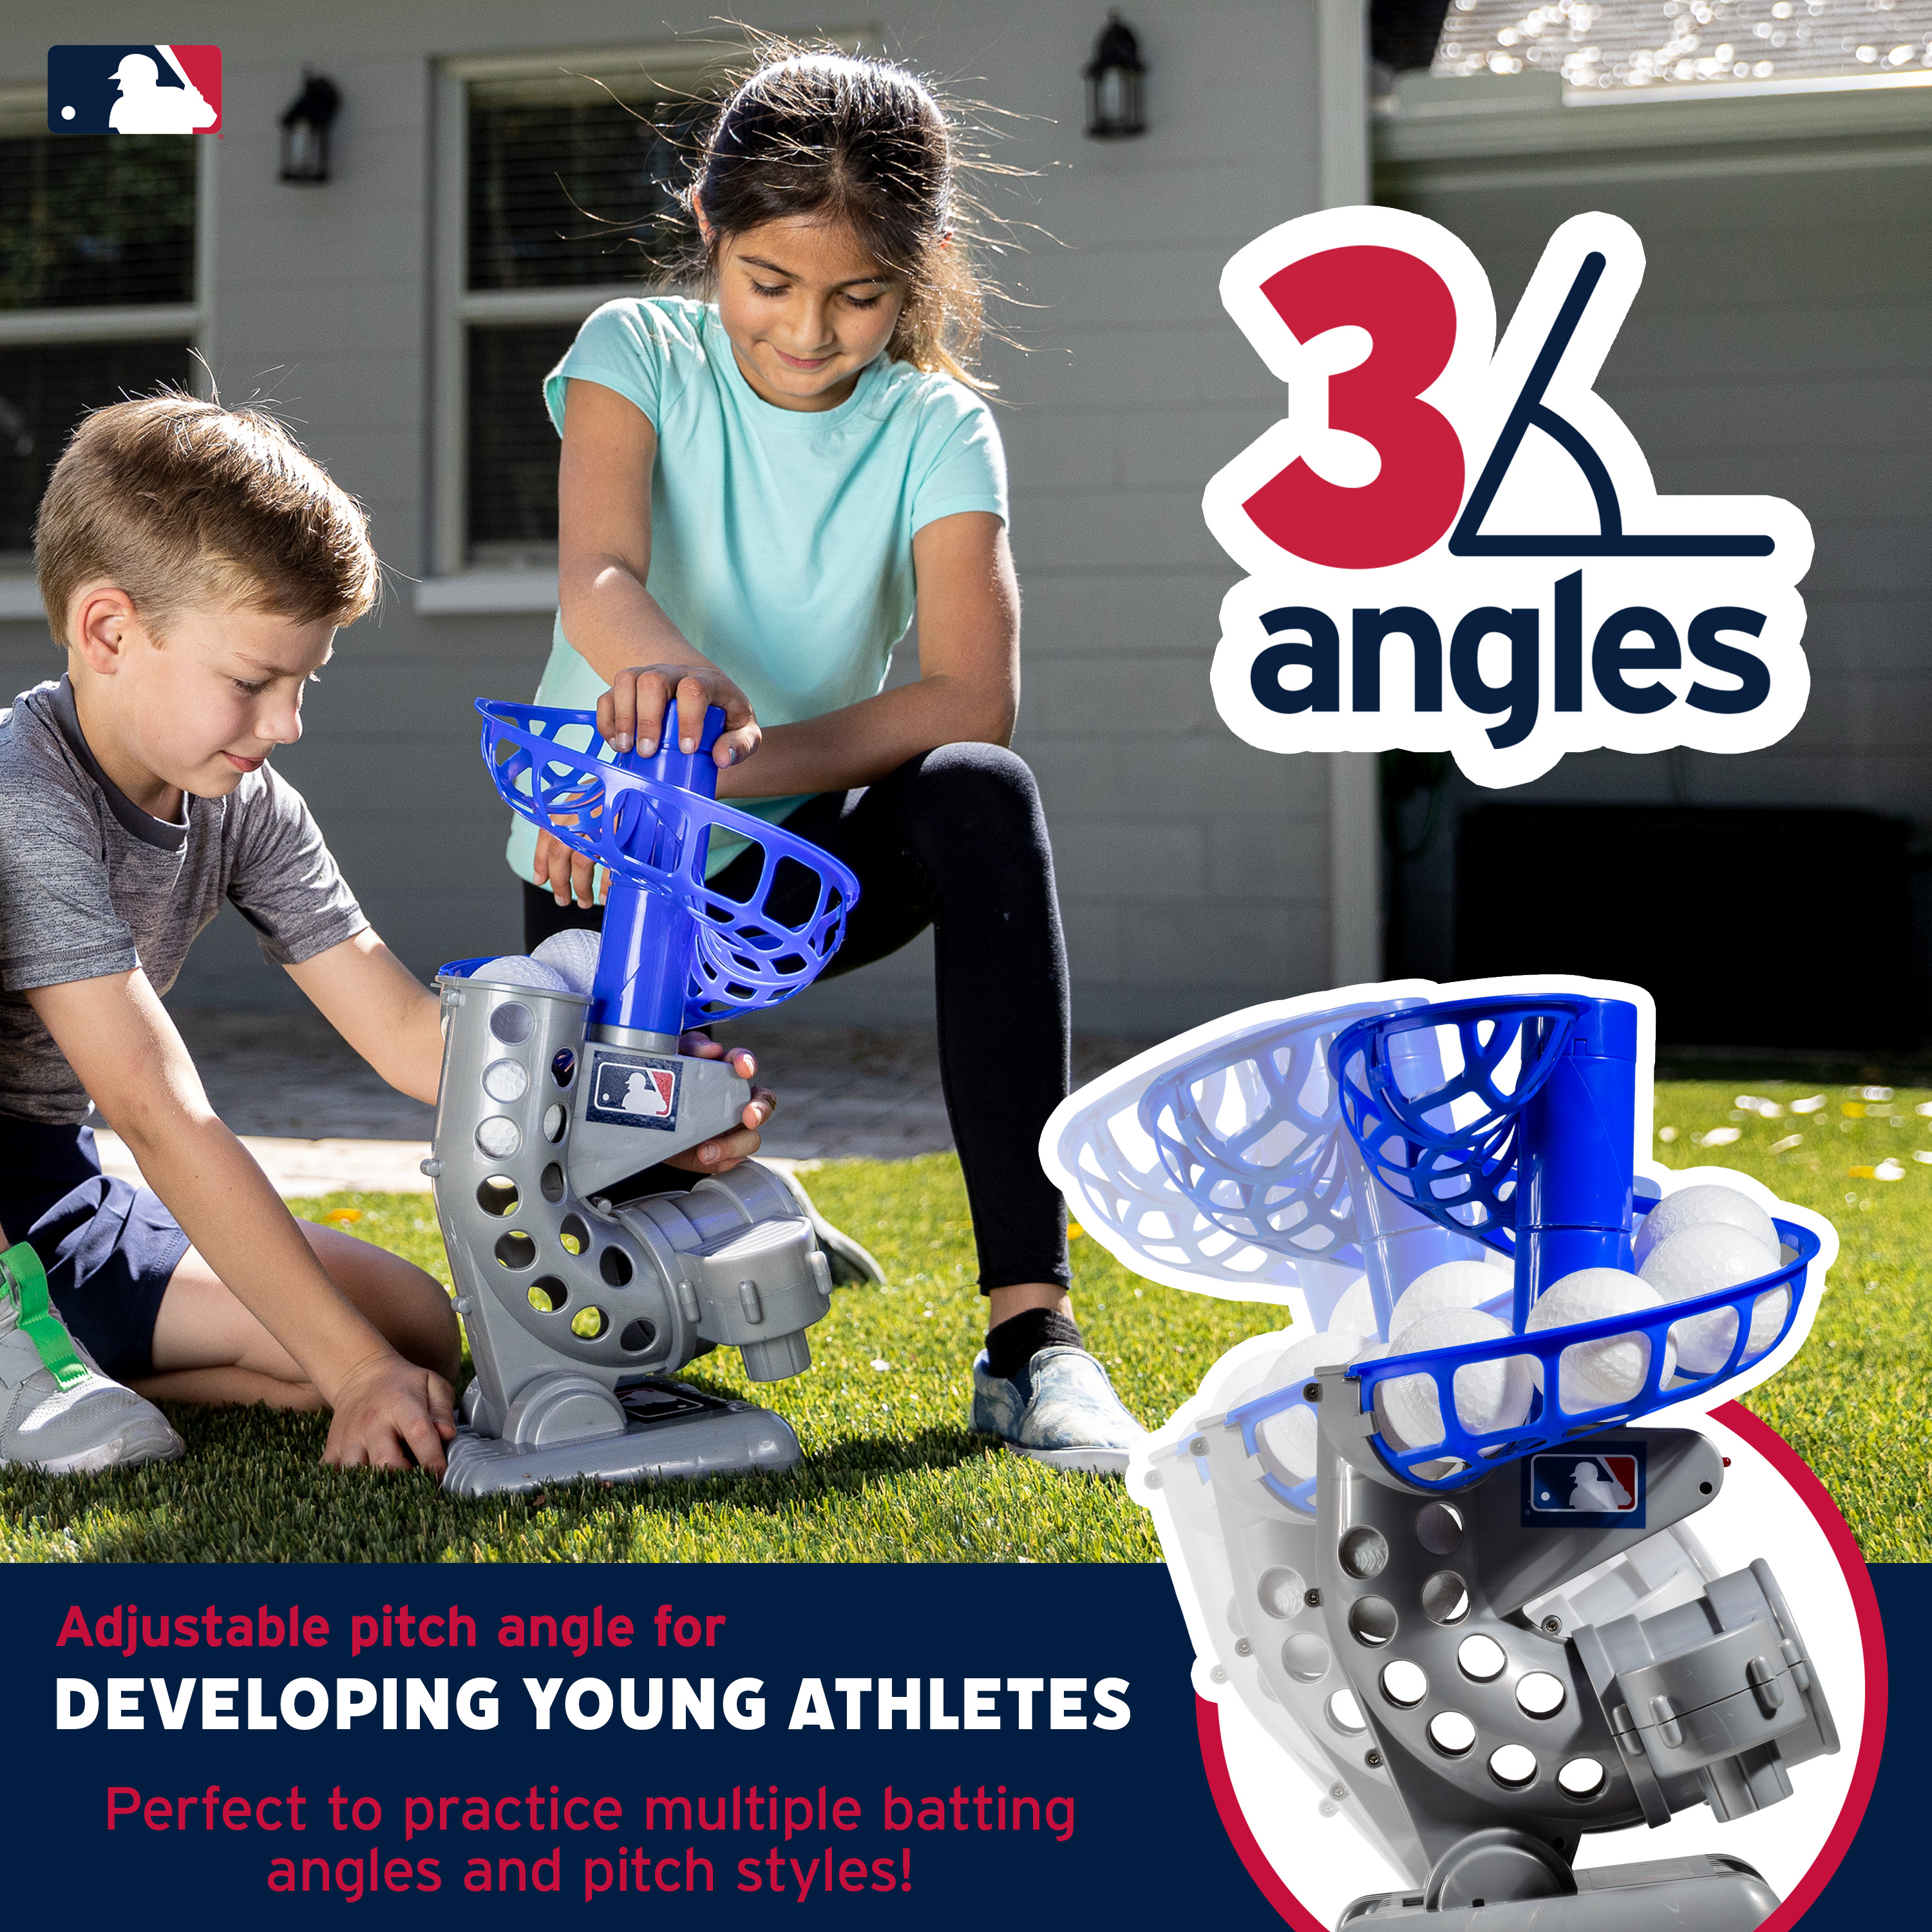 Franklin Sports Kids Baseball Pitching Machine Height Adjustable – 6 Plastic Balls - Grey/Blue - image 8 of 10